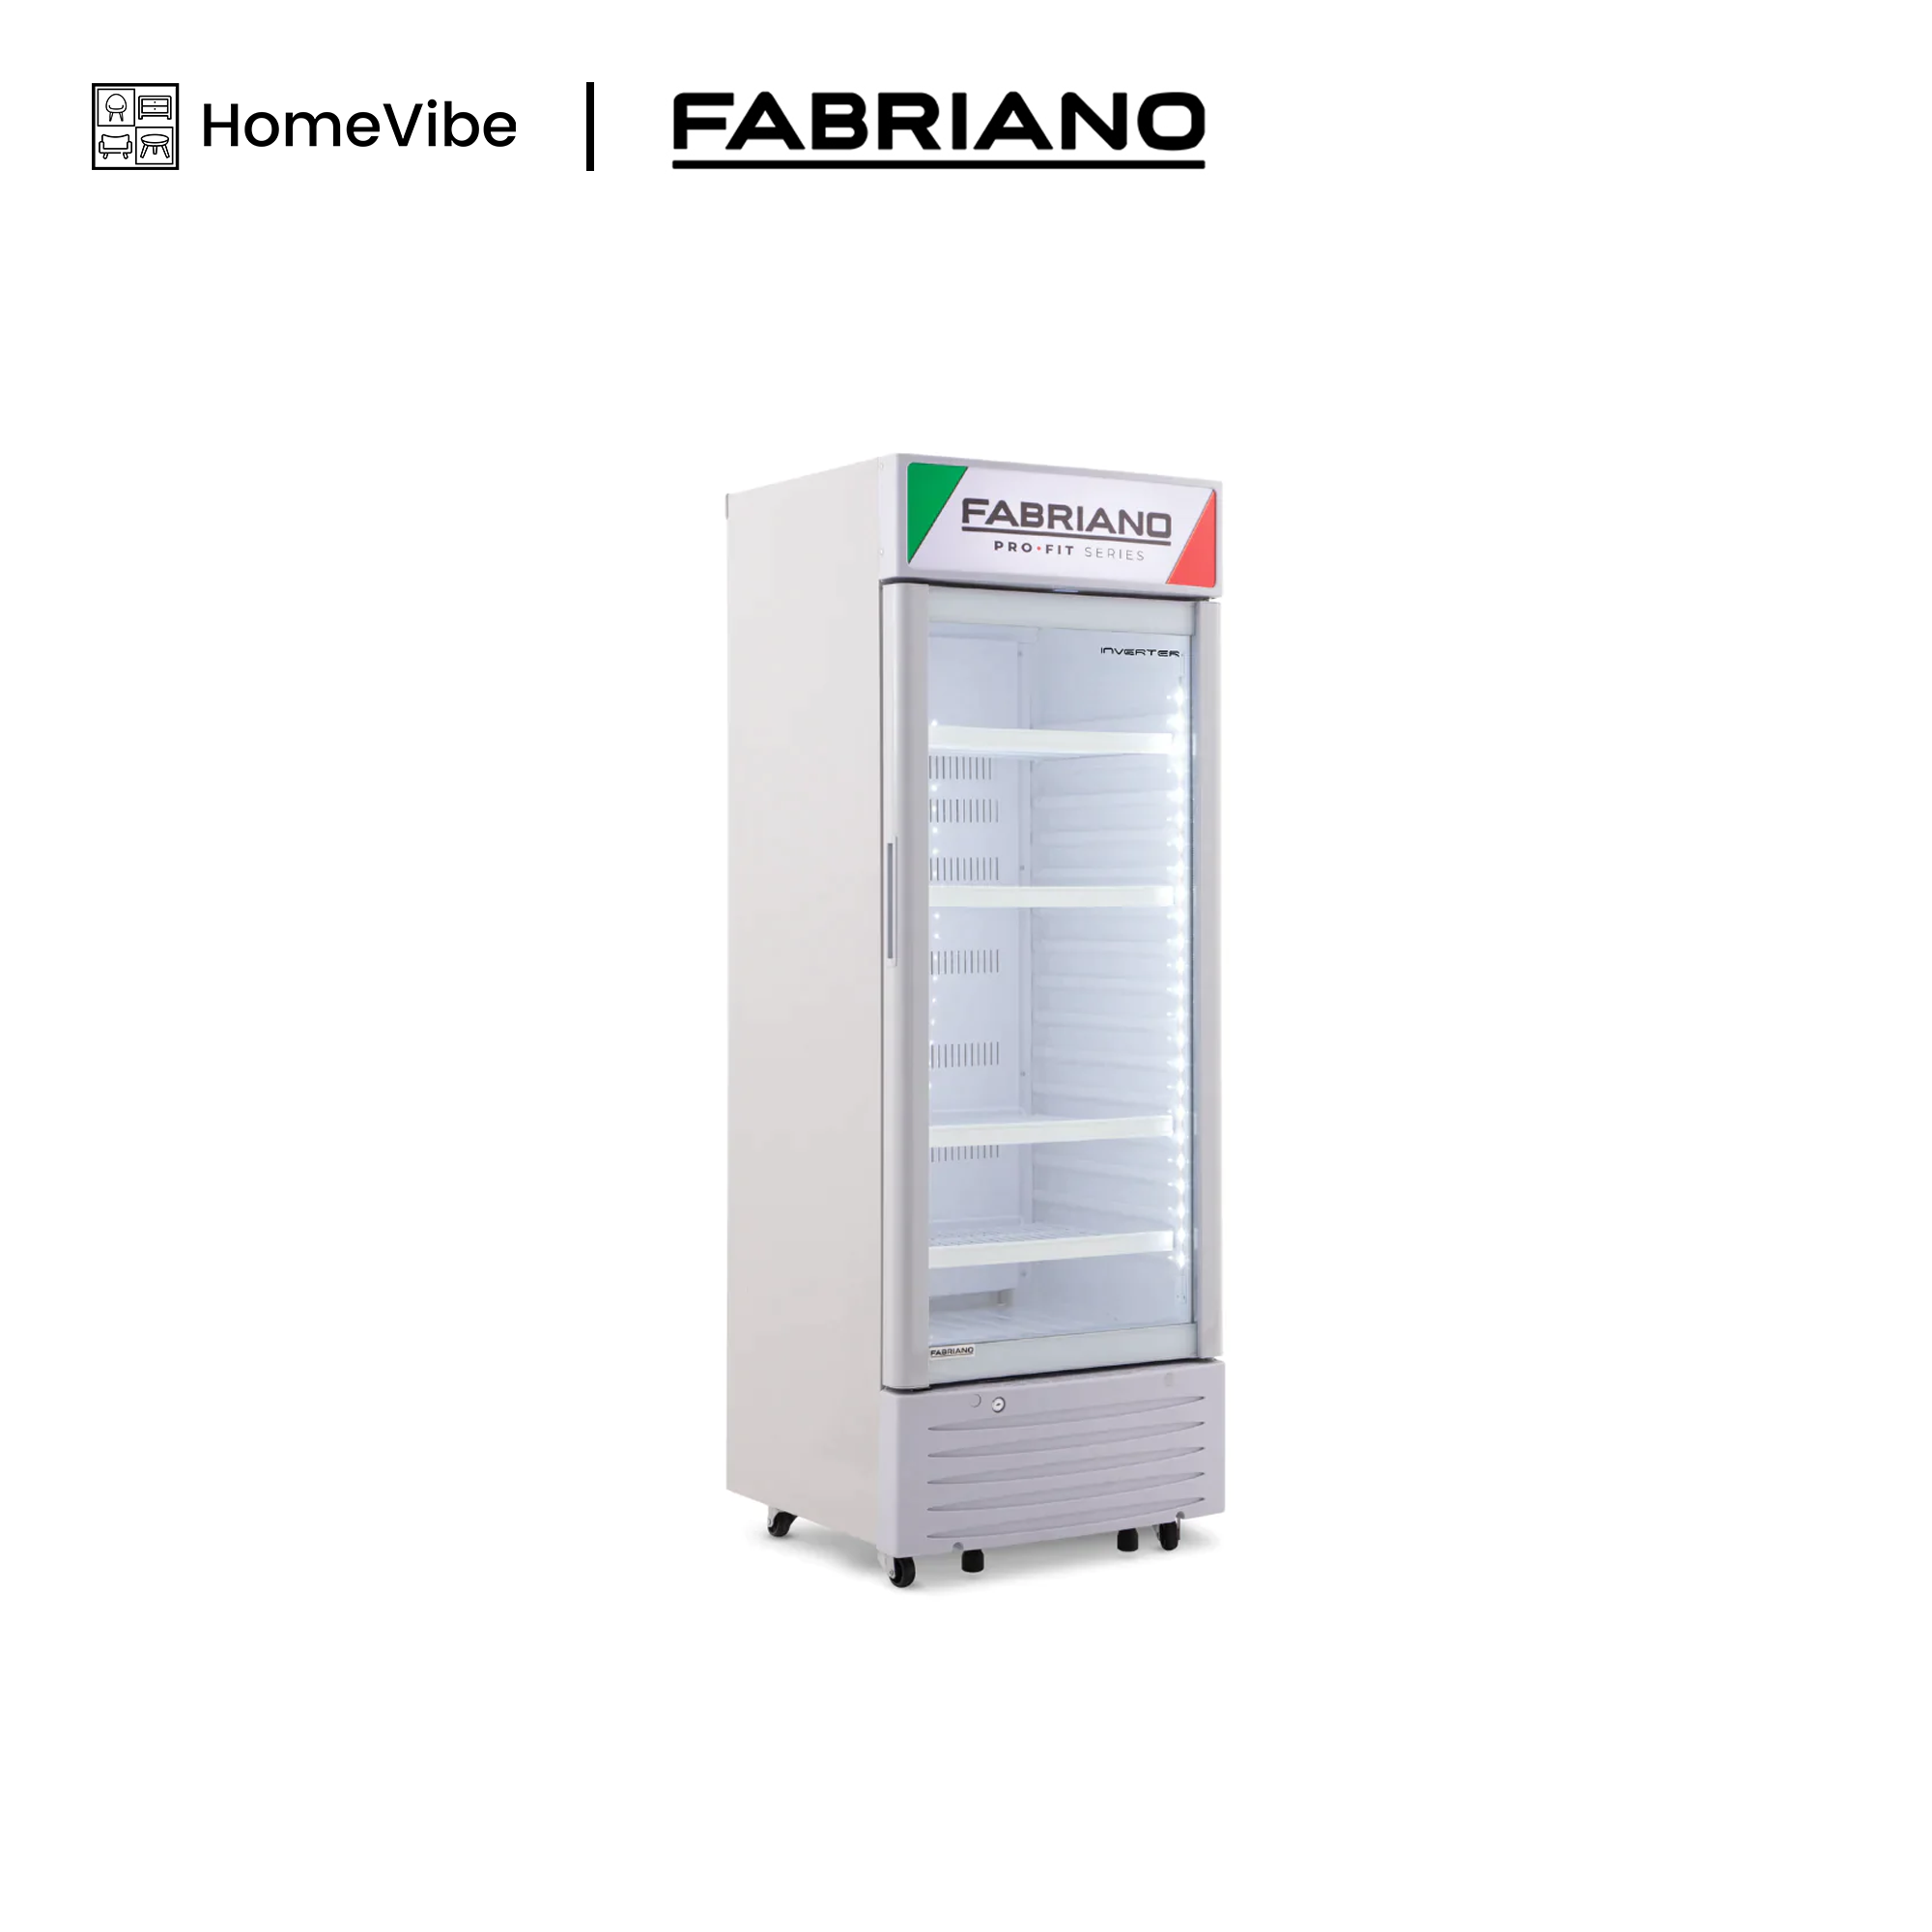 Fabriano 11.2cuft Inverter Showcase Chiller FSC11TWG-I